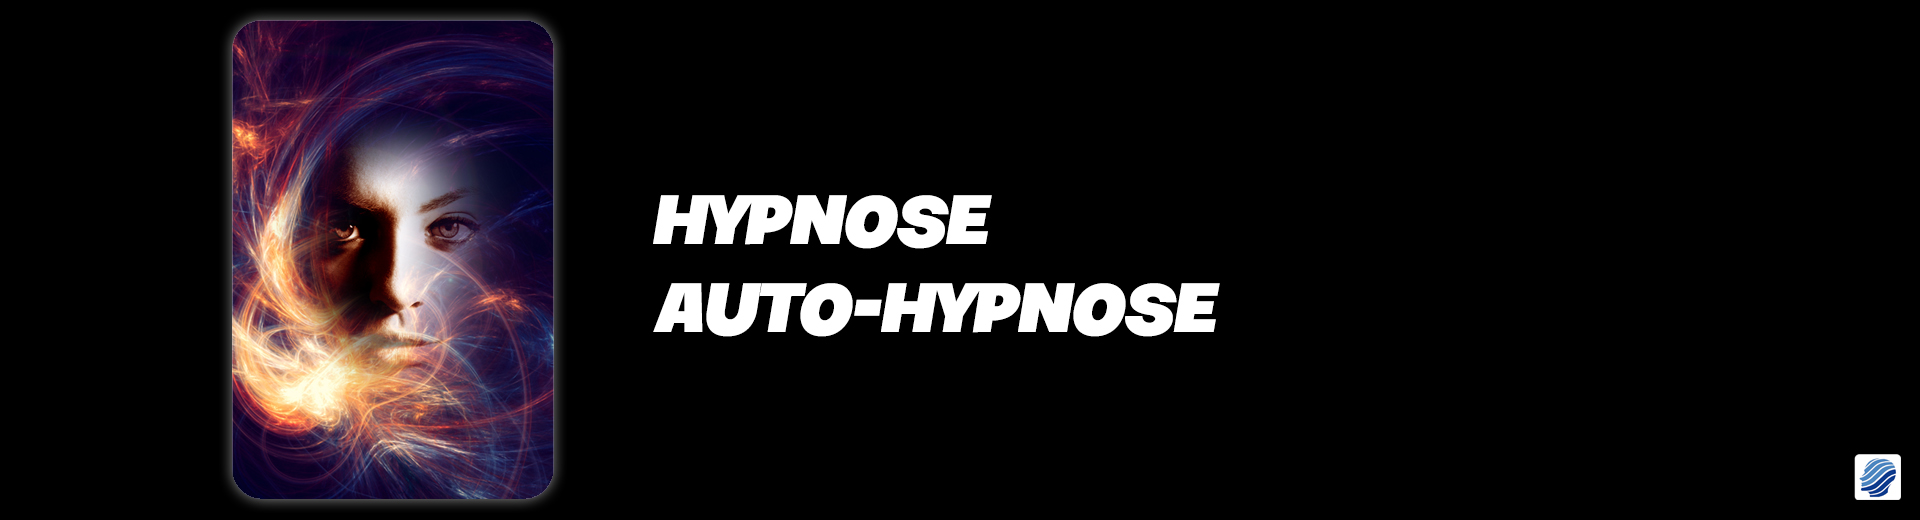 Hypnose - Auto-hypnose